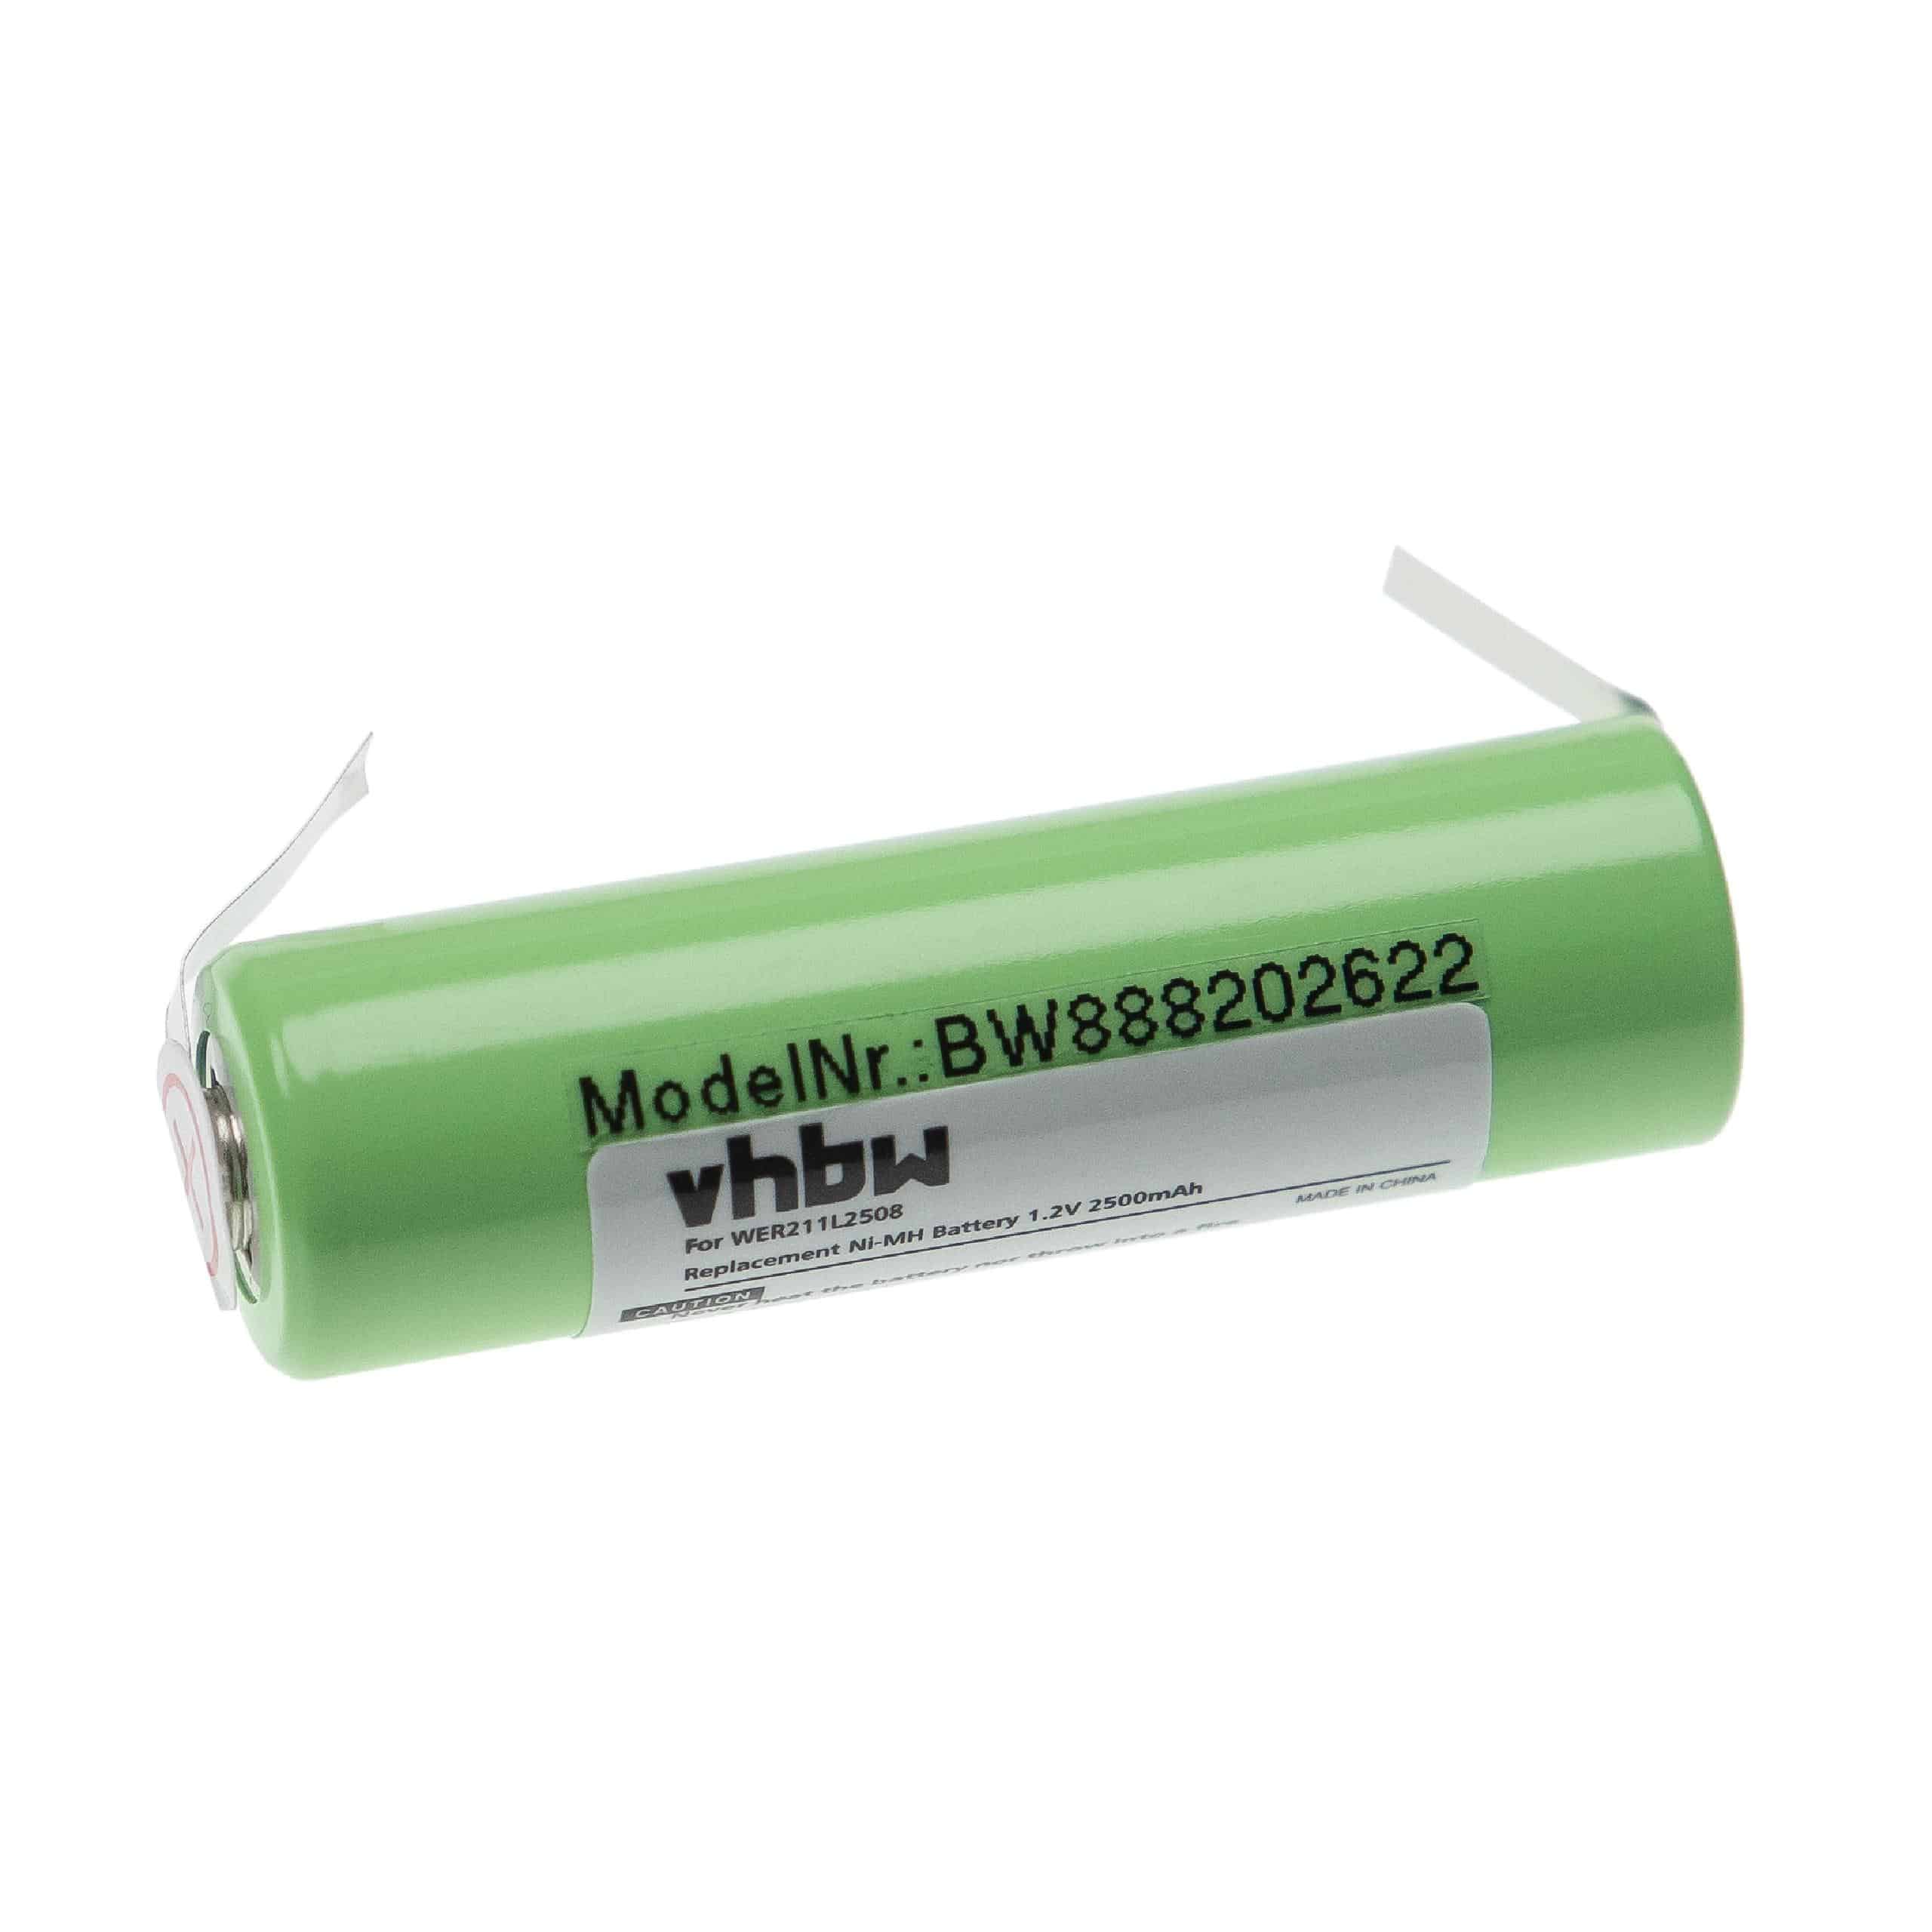 Batteria per rasoio sostituisce Panasonic WER211L2508 Panasonic - 2500mAh 1,2V NiMH